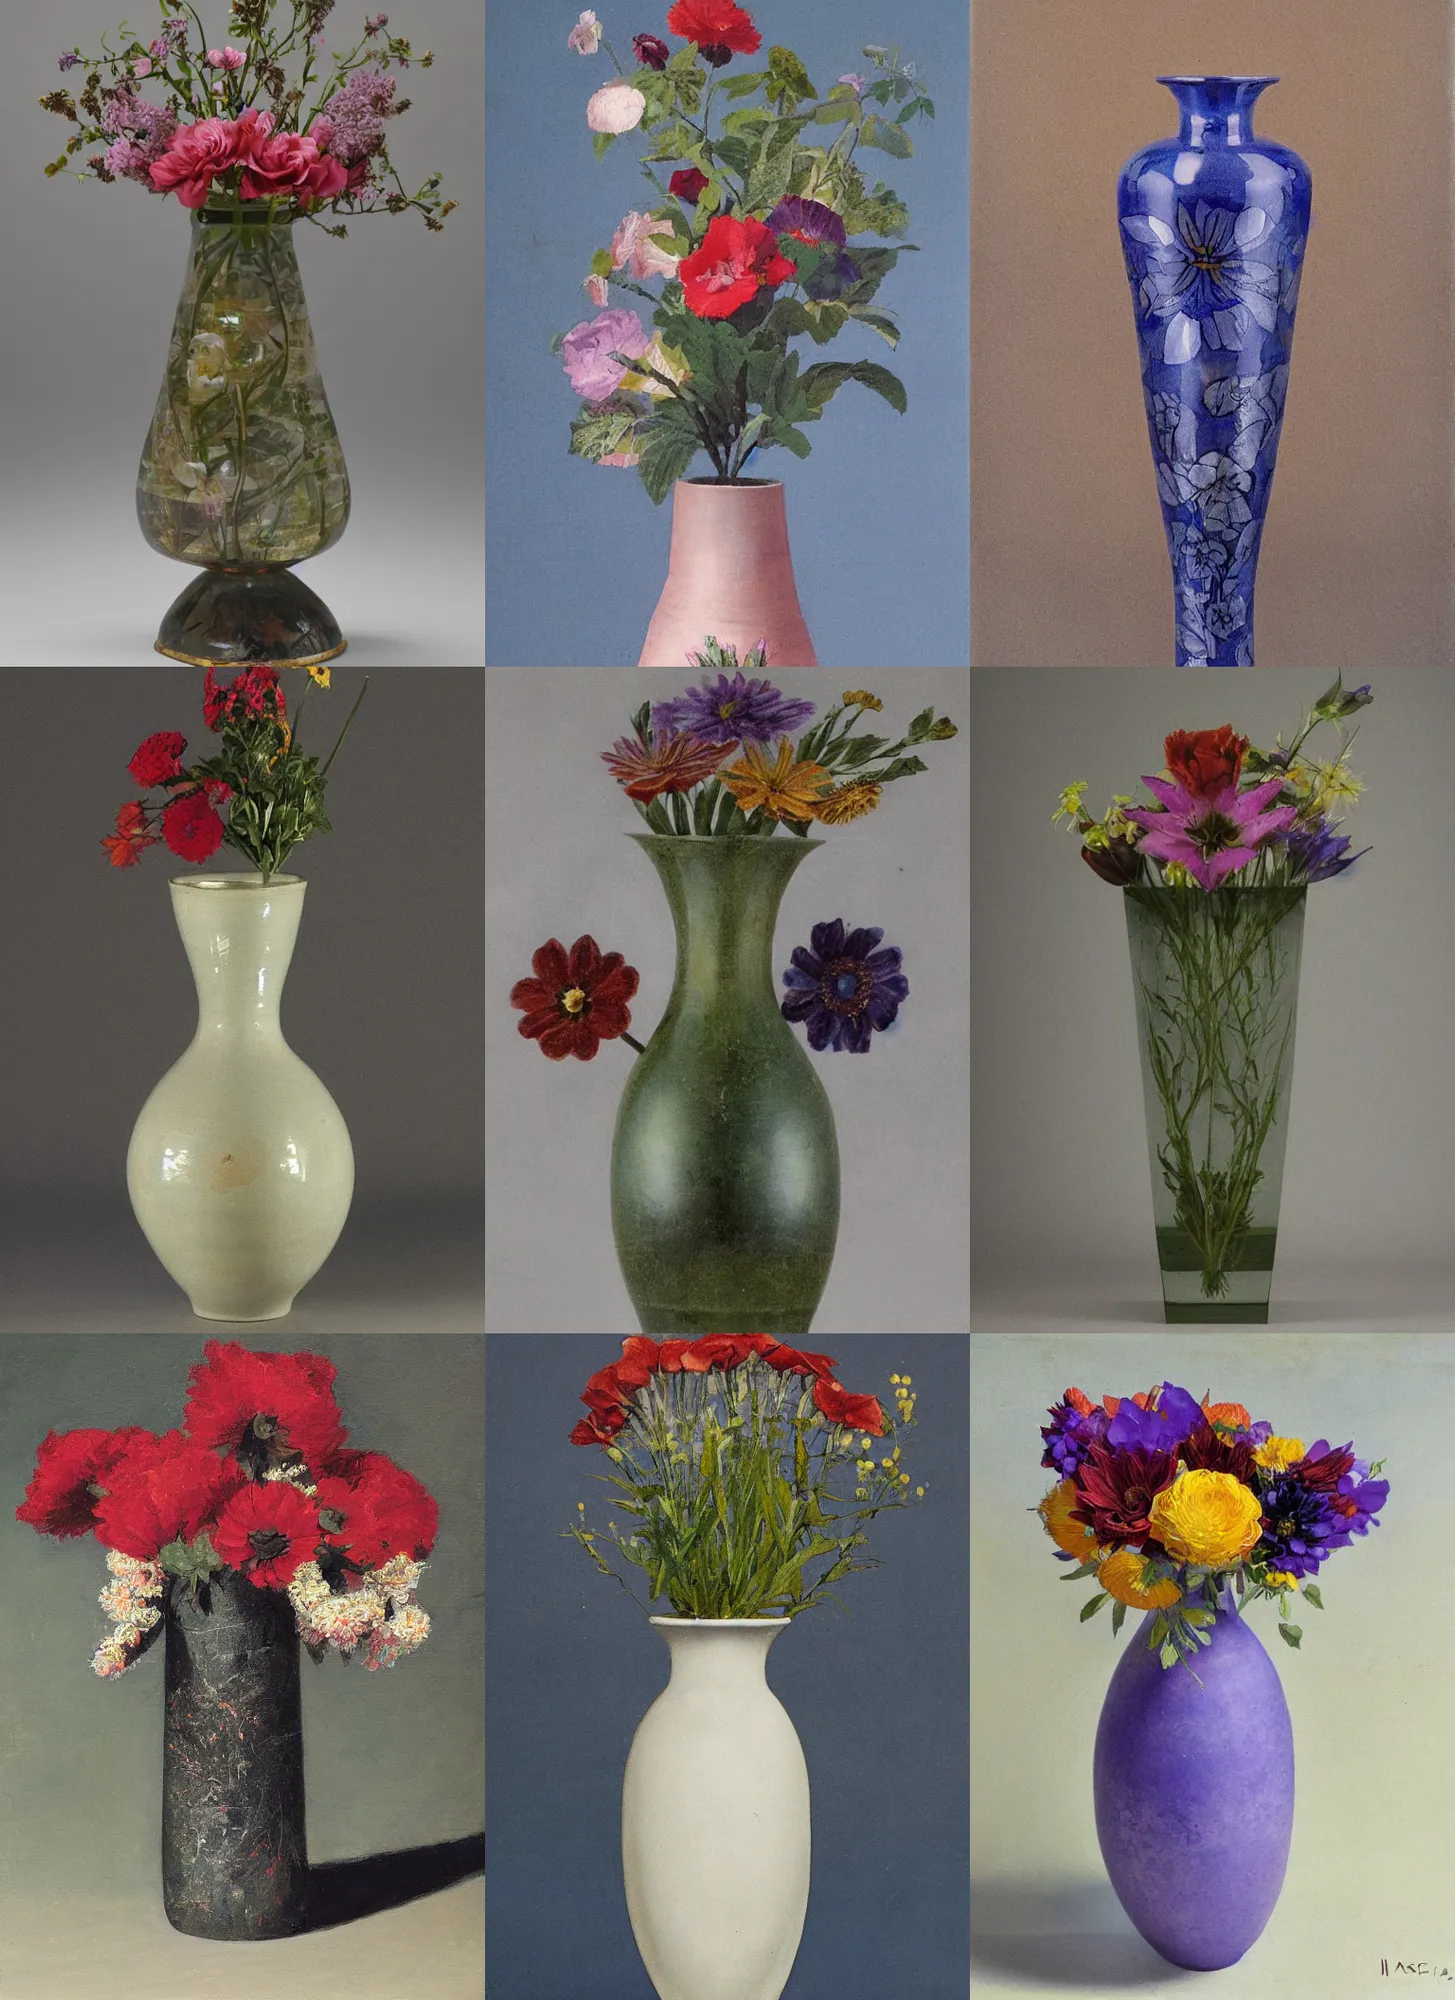 Prompt: a flower vase by Ivan Seal